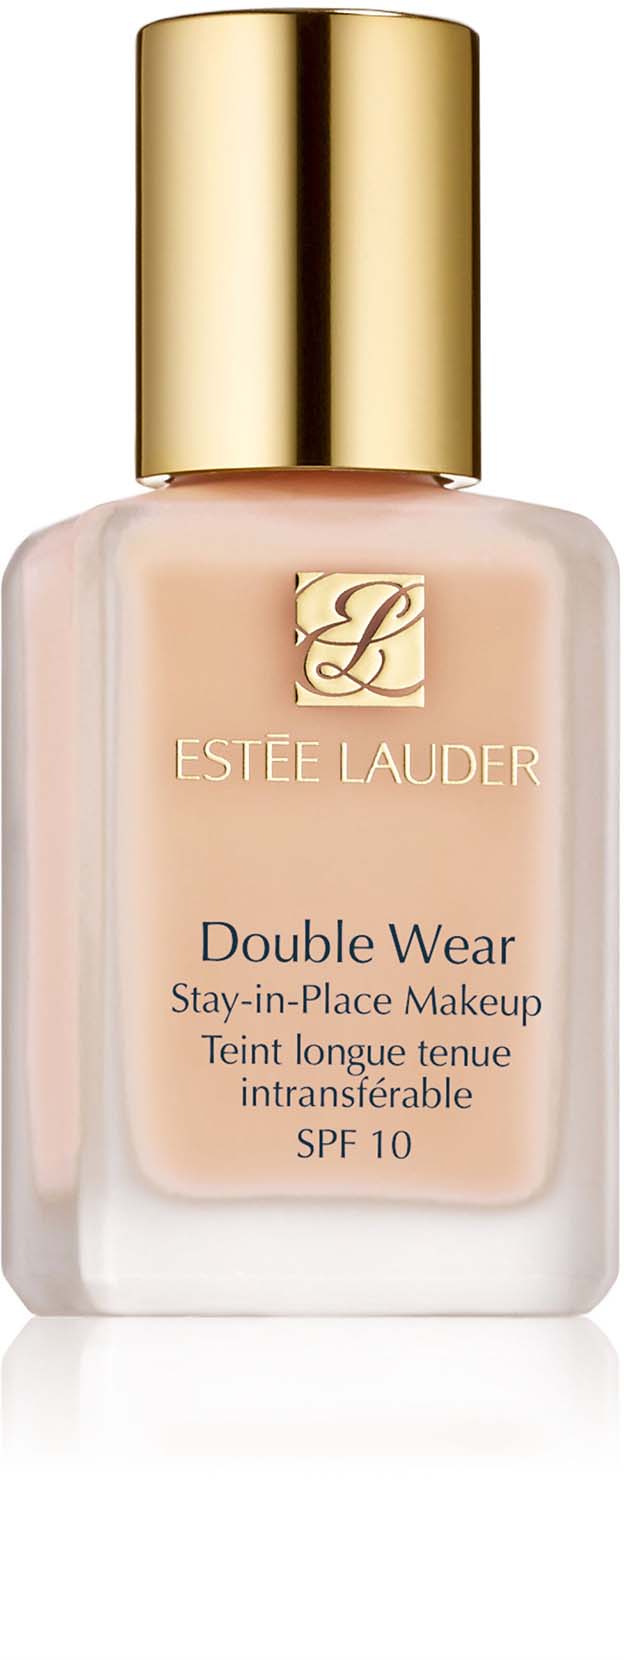 Estee Lauder, Makeup, Este Lauder Double Wear Foundation